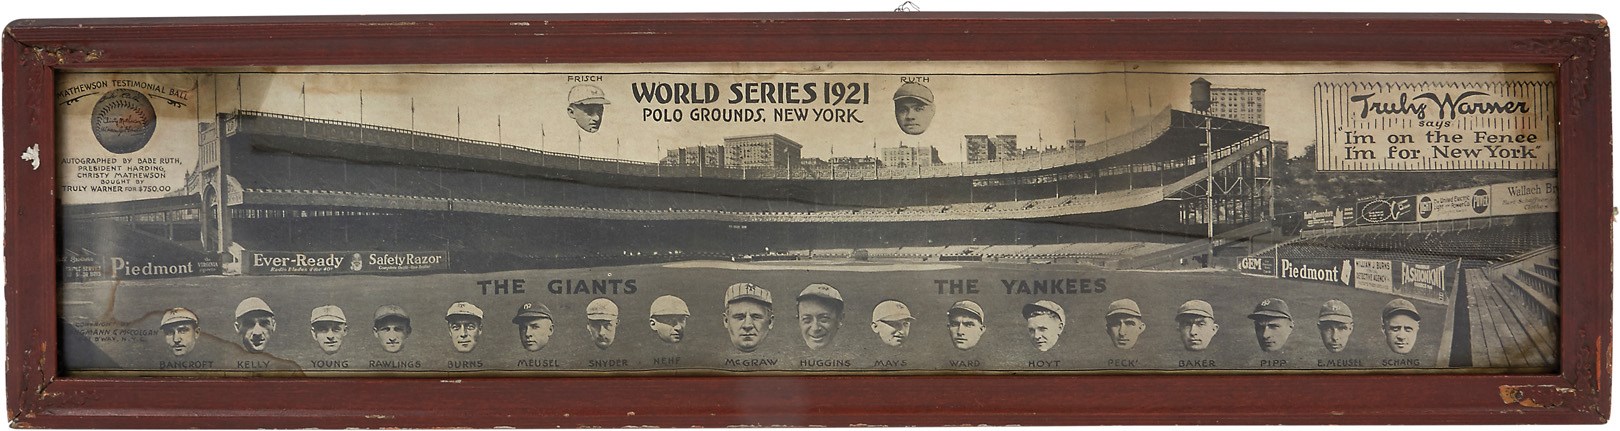 NY Yankees, Giants & Mets - 1921 World Series Yankees vs. Giants Panorama featuring Ruth & Mathewson Signed Baseball